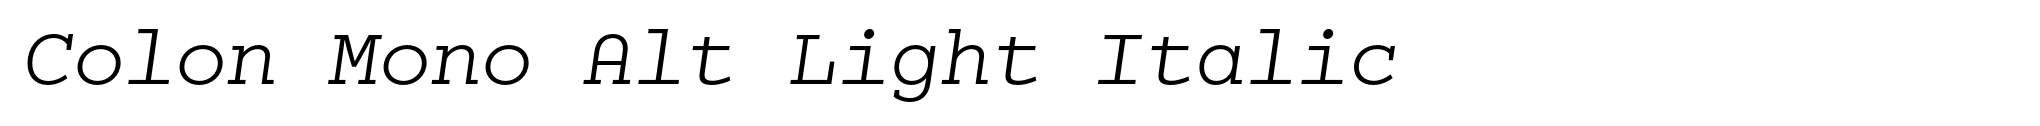 Colon Mono Alt Light Italic image